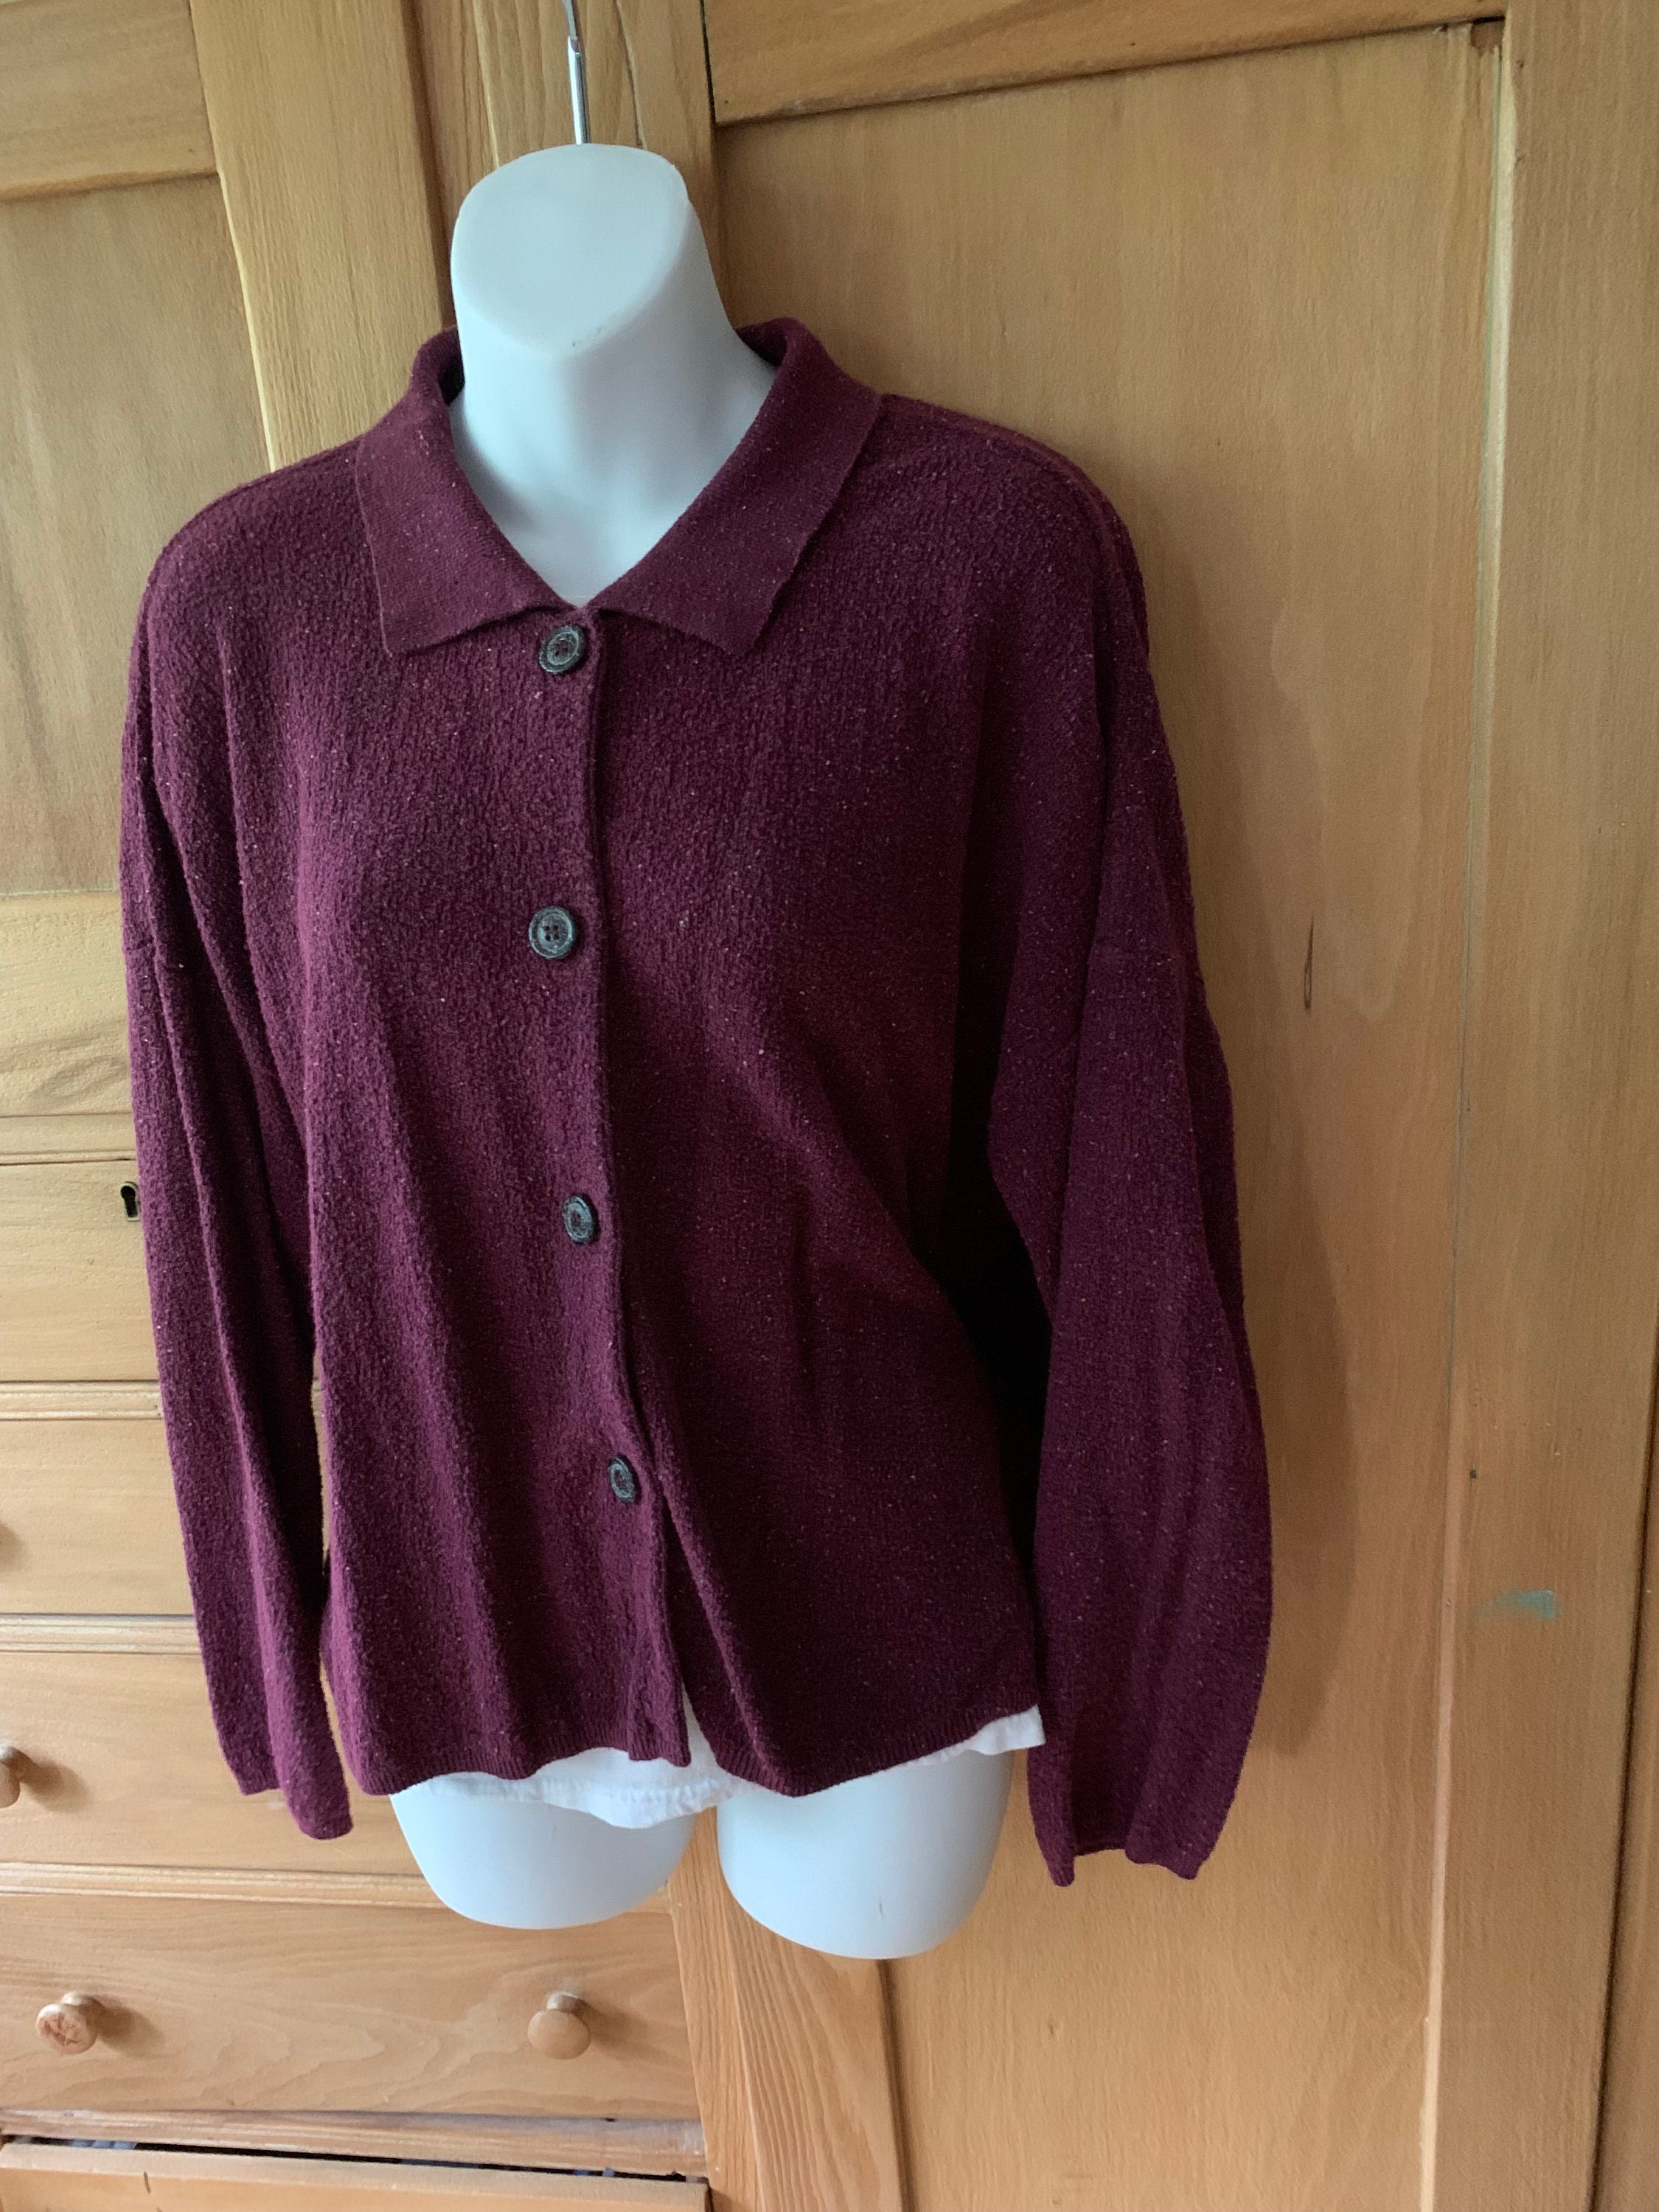 J.Jill 100% Merino Extra Fine Wool Color Block Solid Purple Wool Pullover  Sweater Size M (Petite) - 72% off